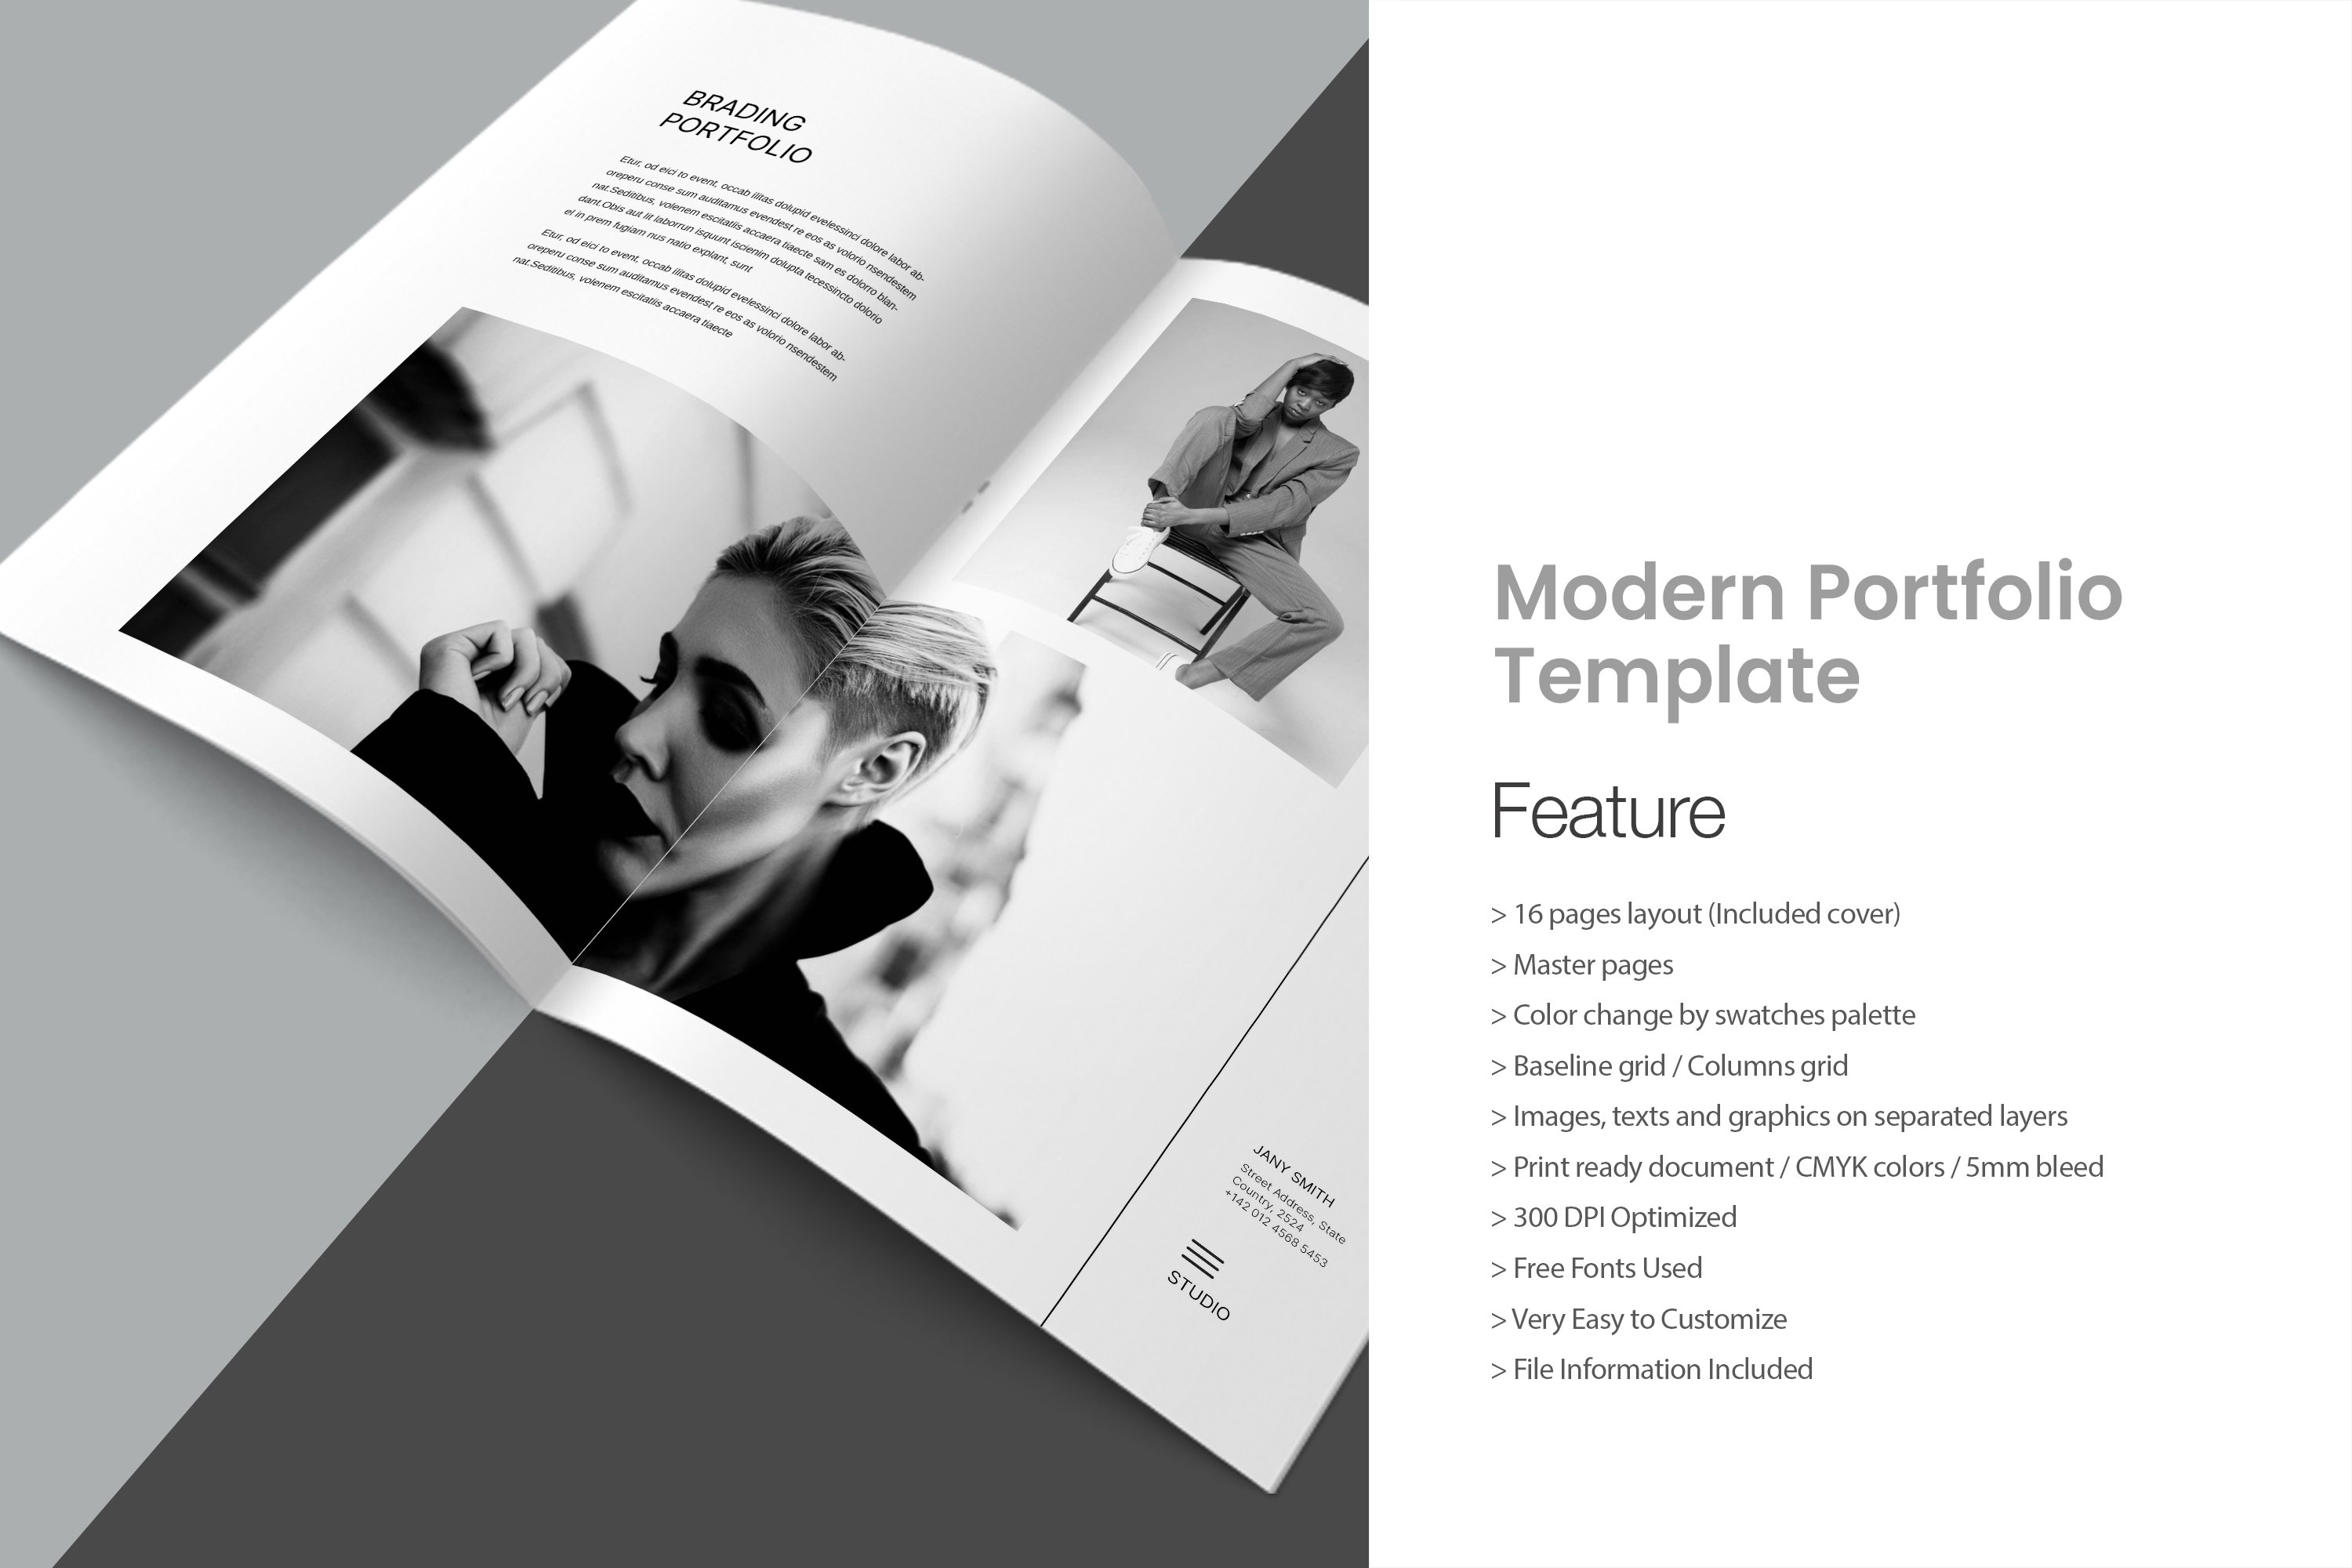 Modern Portfolio Template preview image.